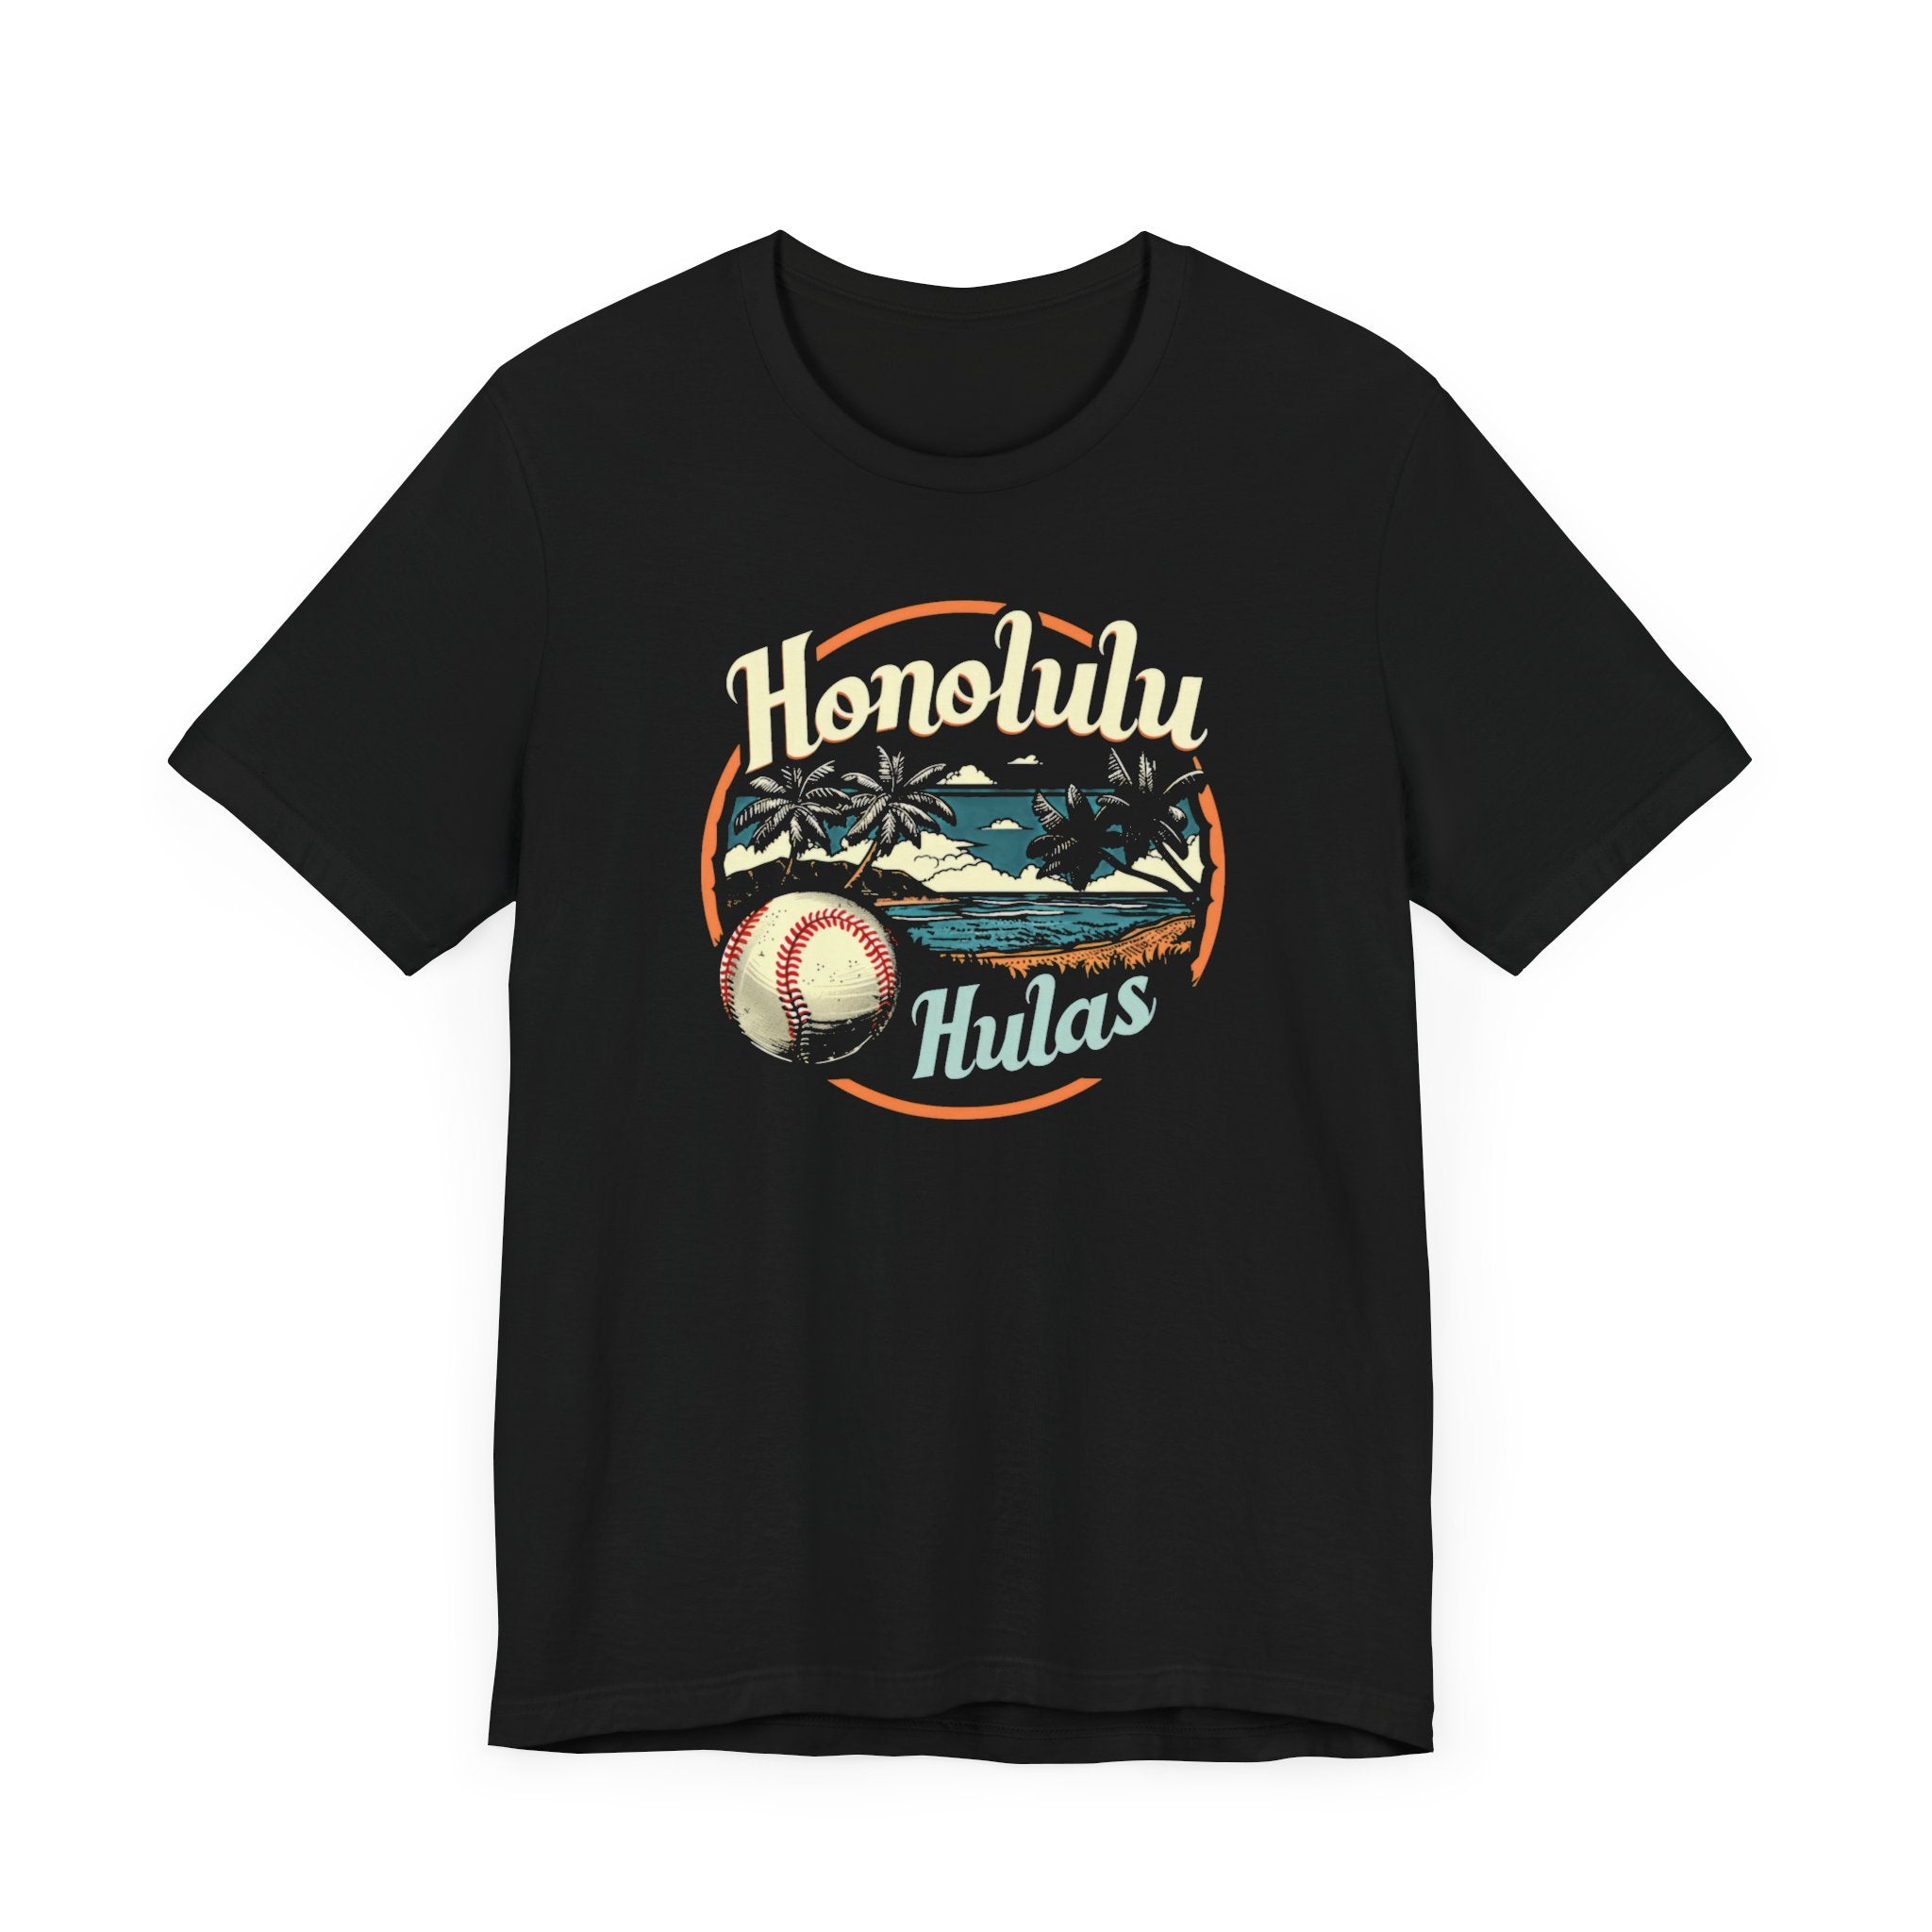 Honolulu Hulas T-Shirt Baseball Team Graphic Tee